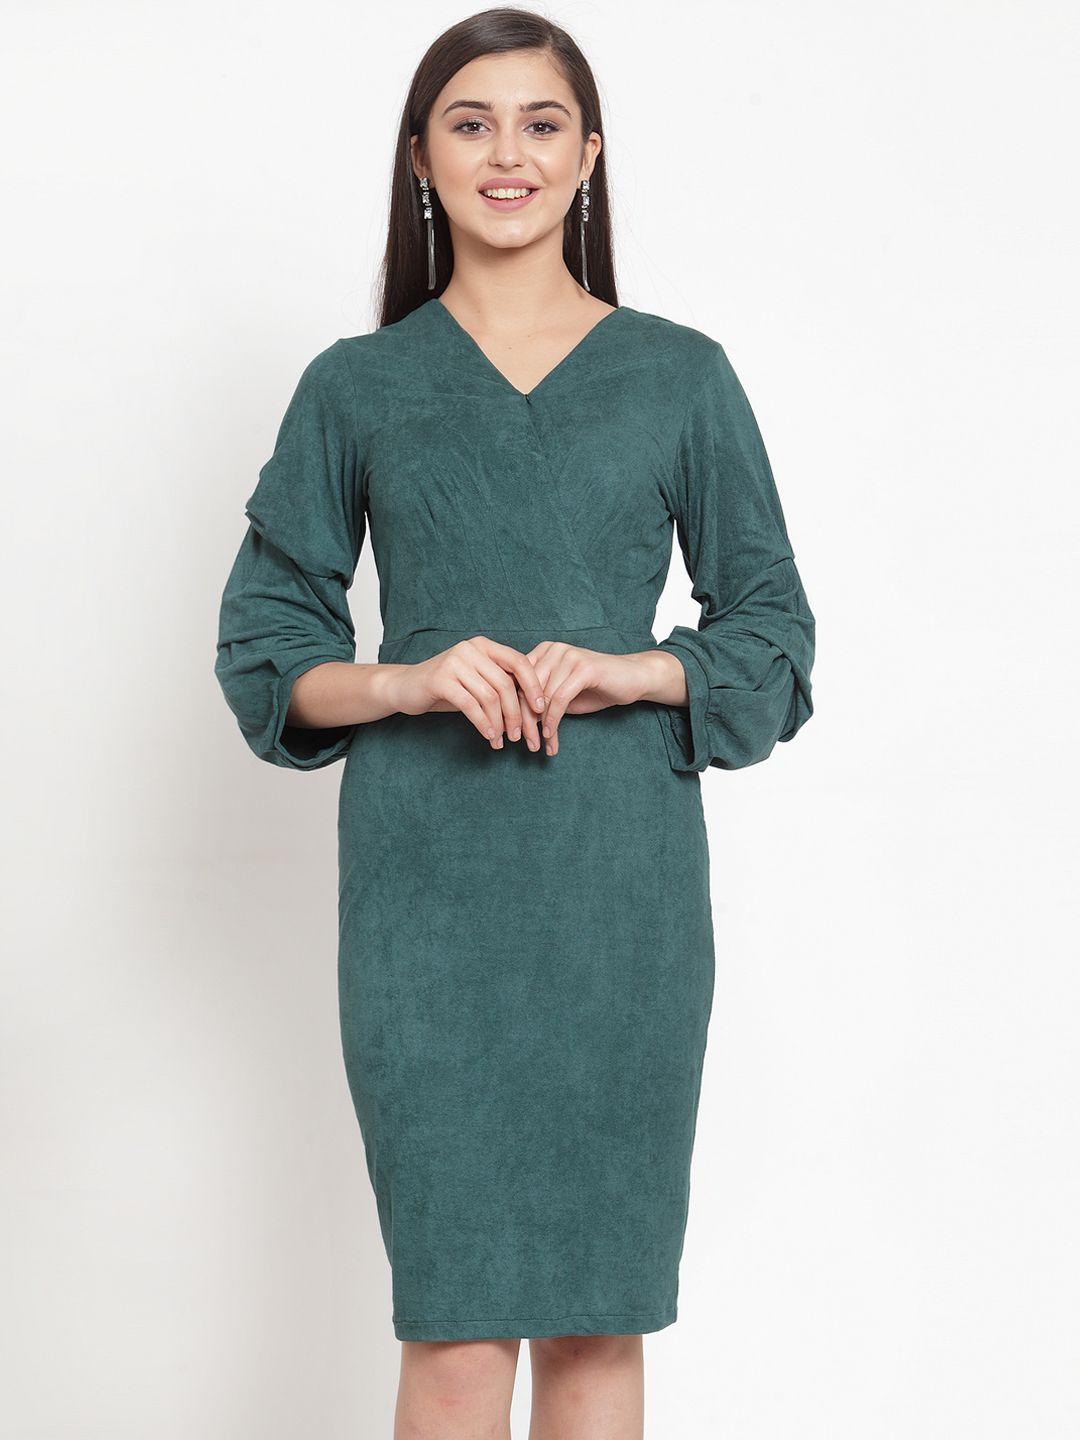 kassually women teal green solid sheath dress